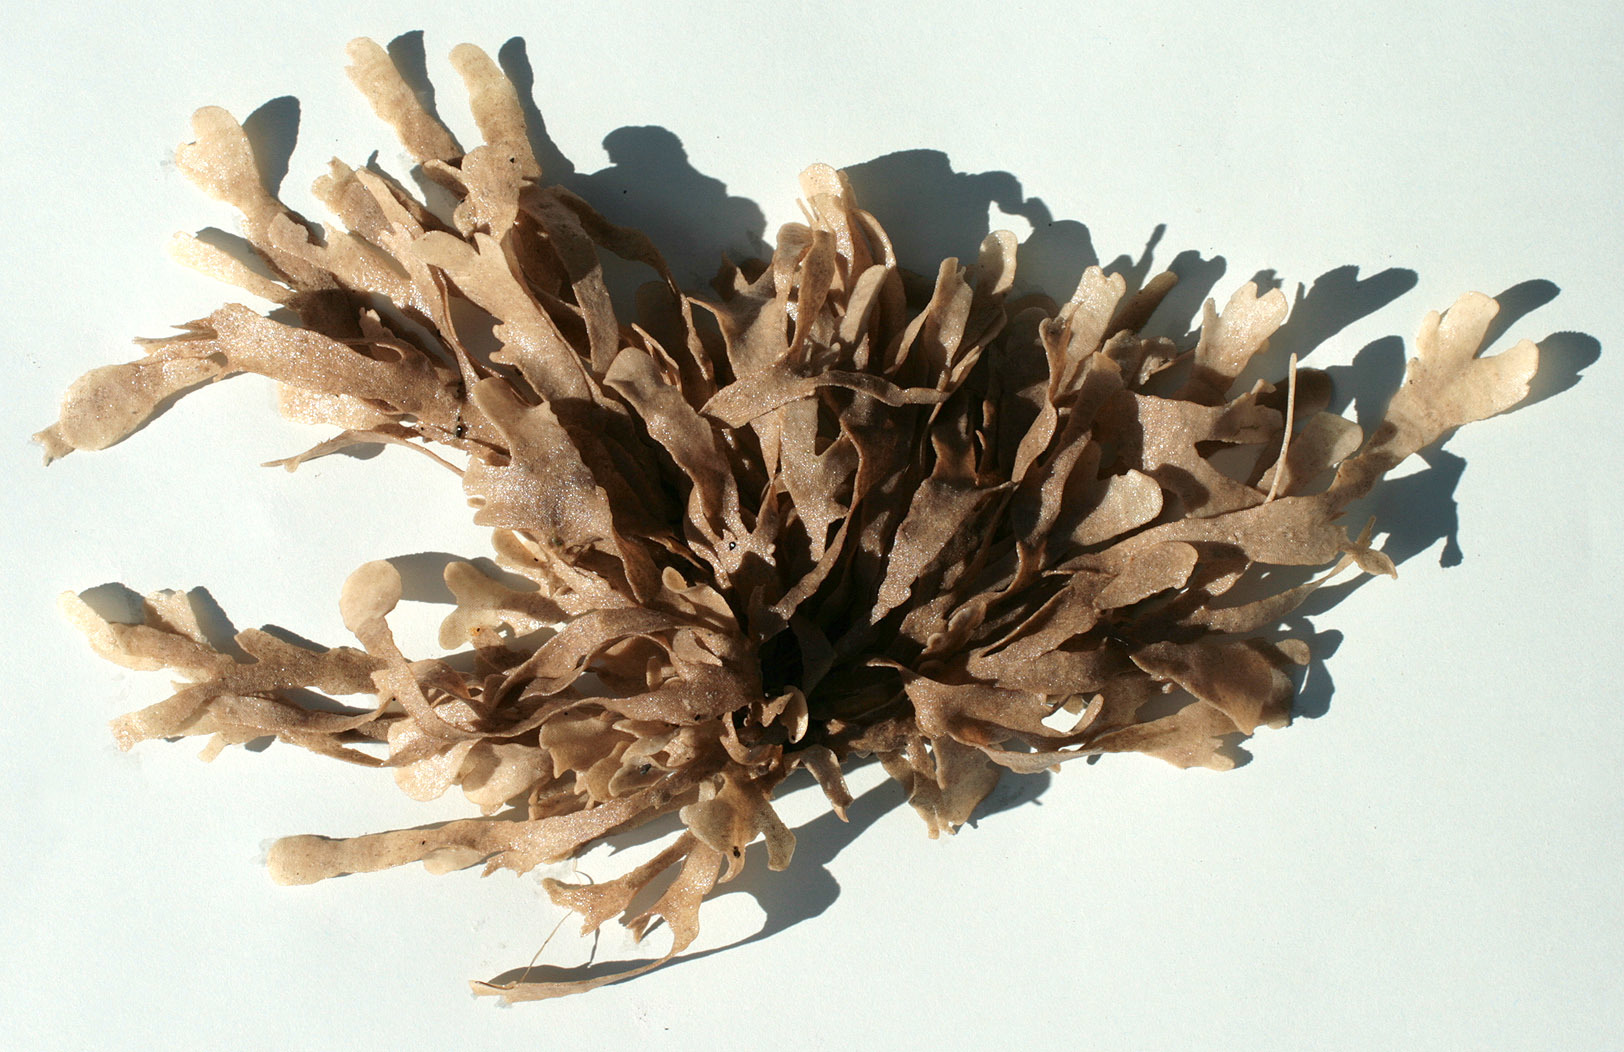 Image of leafy bryozoan